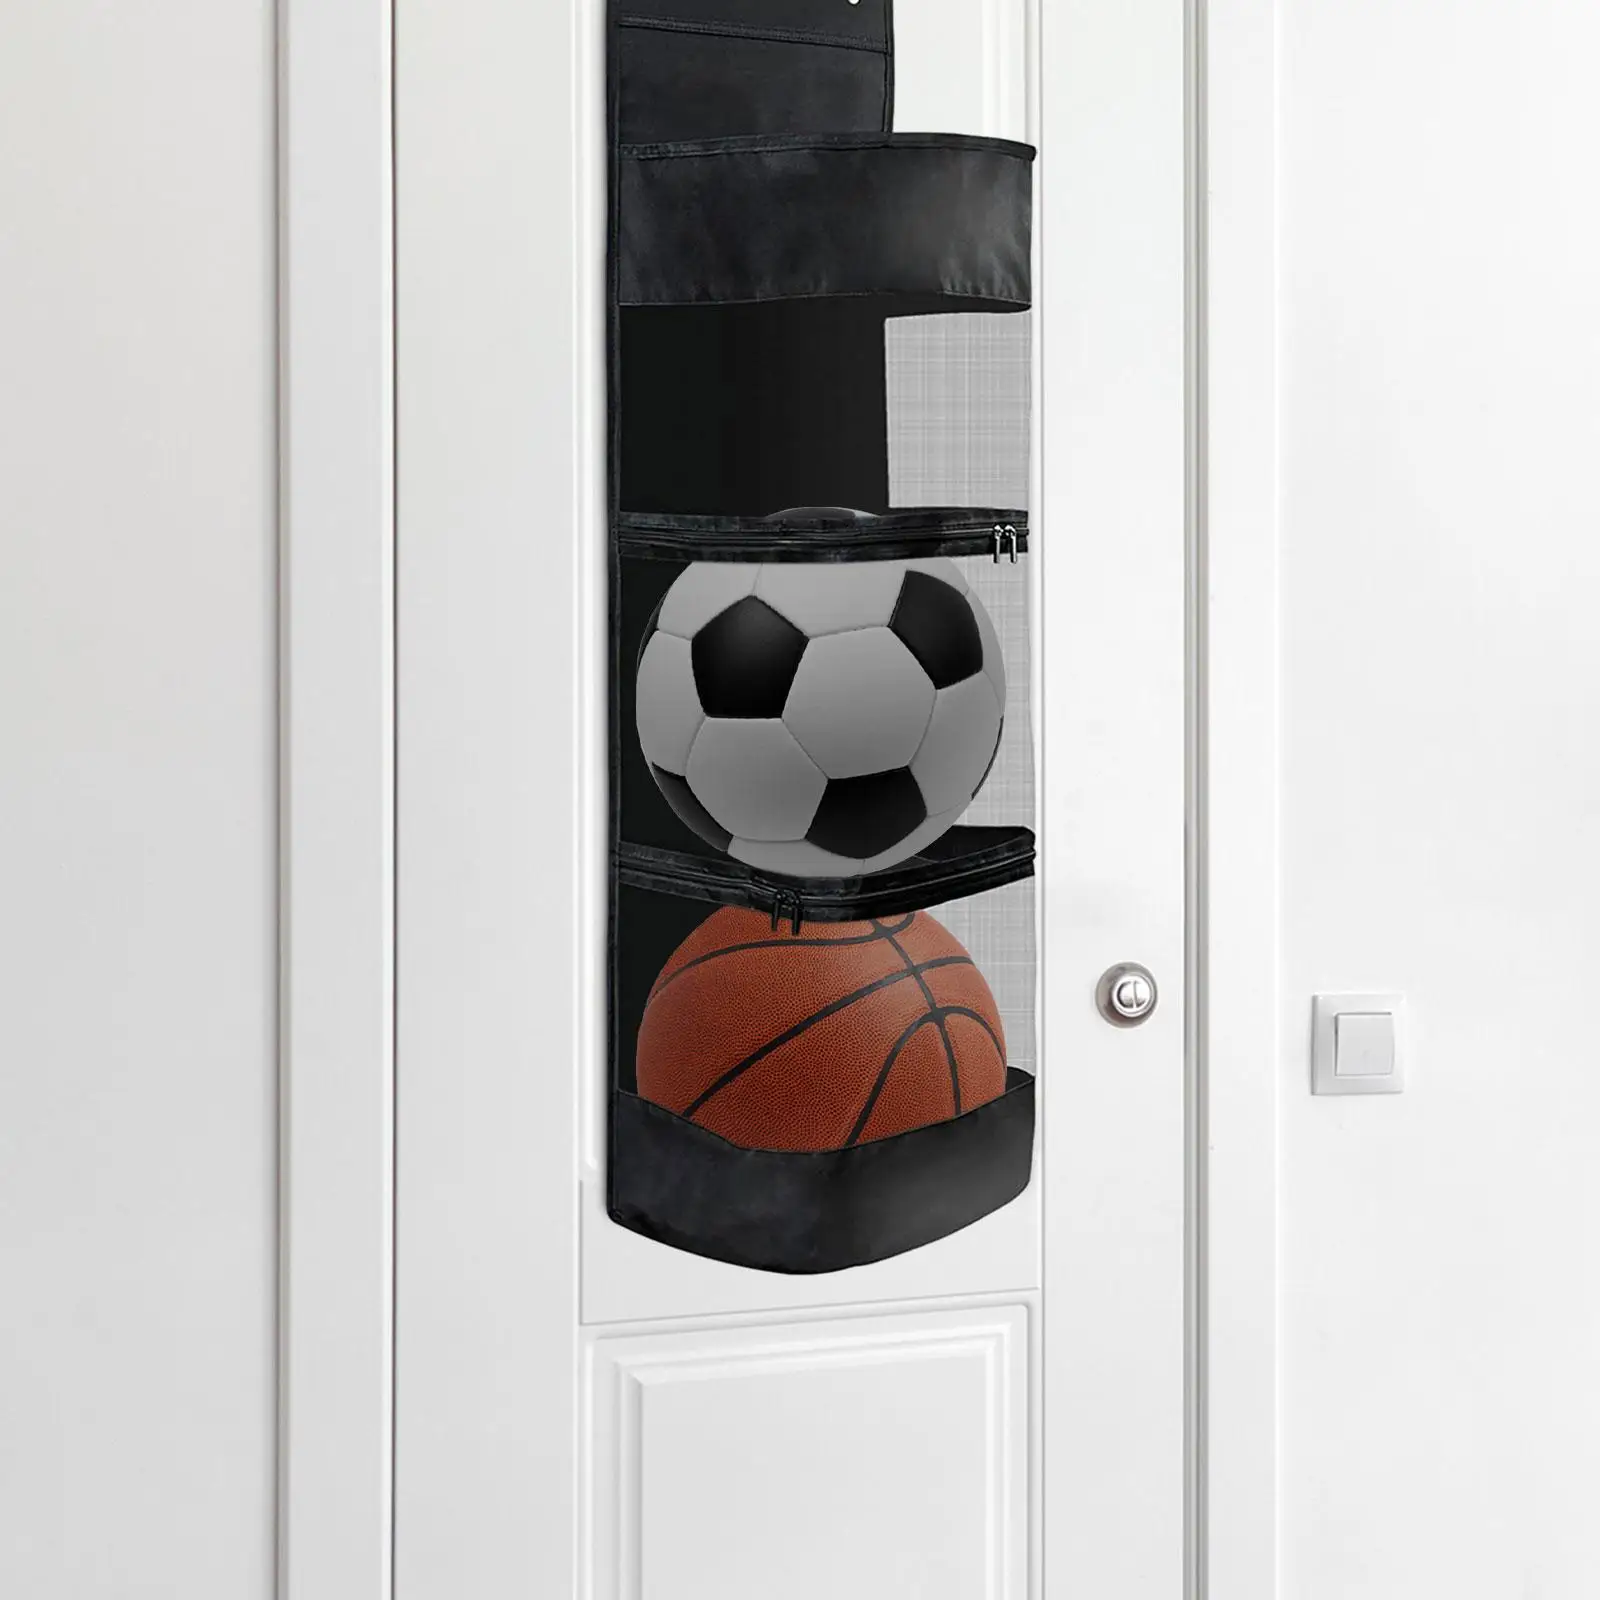 over Door Hanging Organizer Hanging Storage Mesh Basket Back of Door Storage Organizer for Tennis Soccer Football Socks Dolls